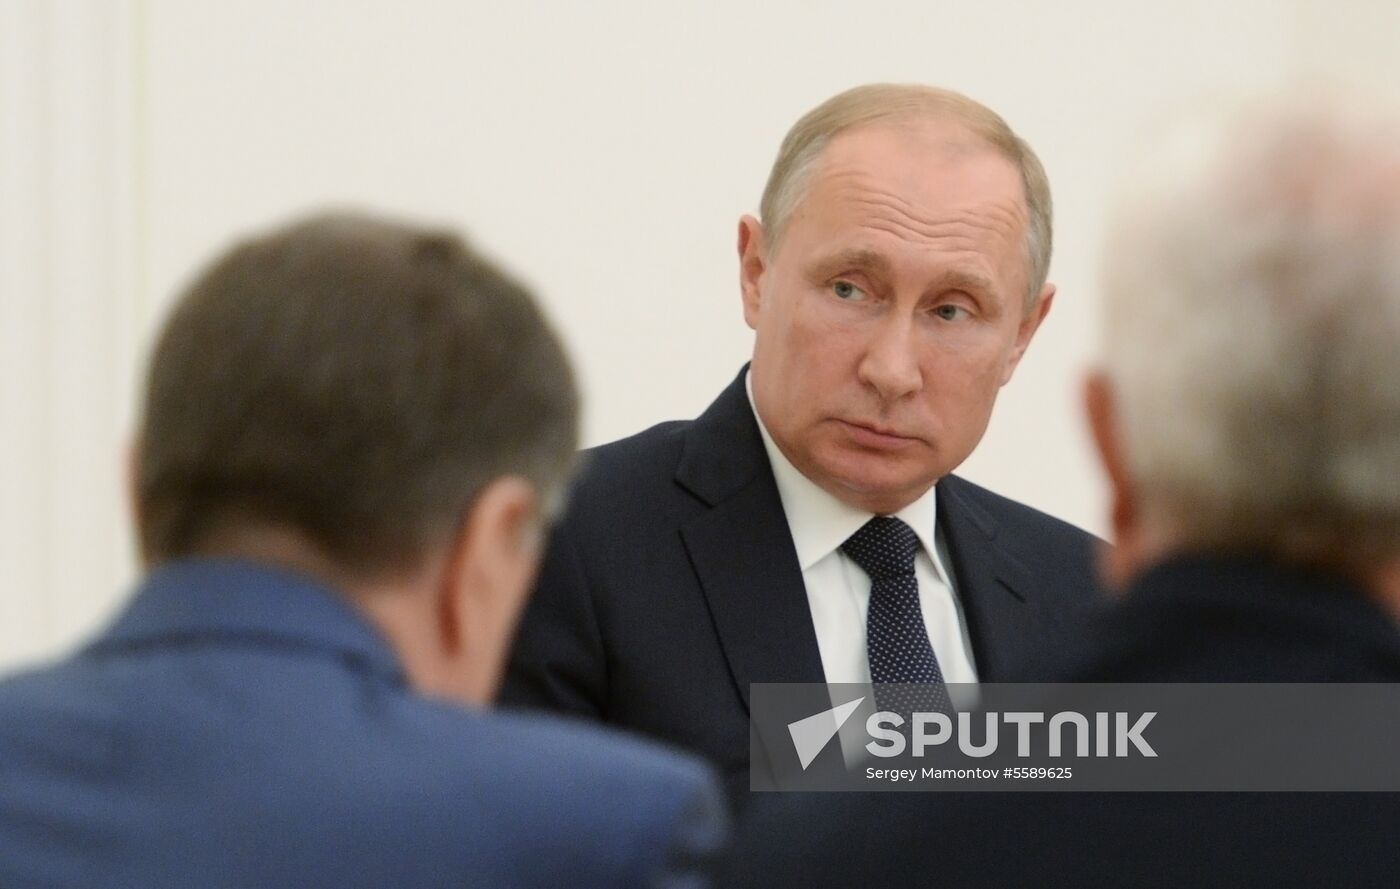 Putin meets with Dodon